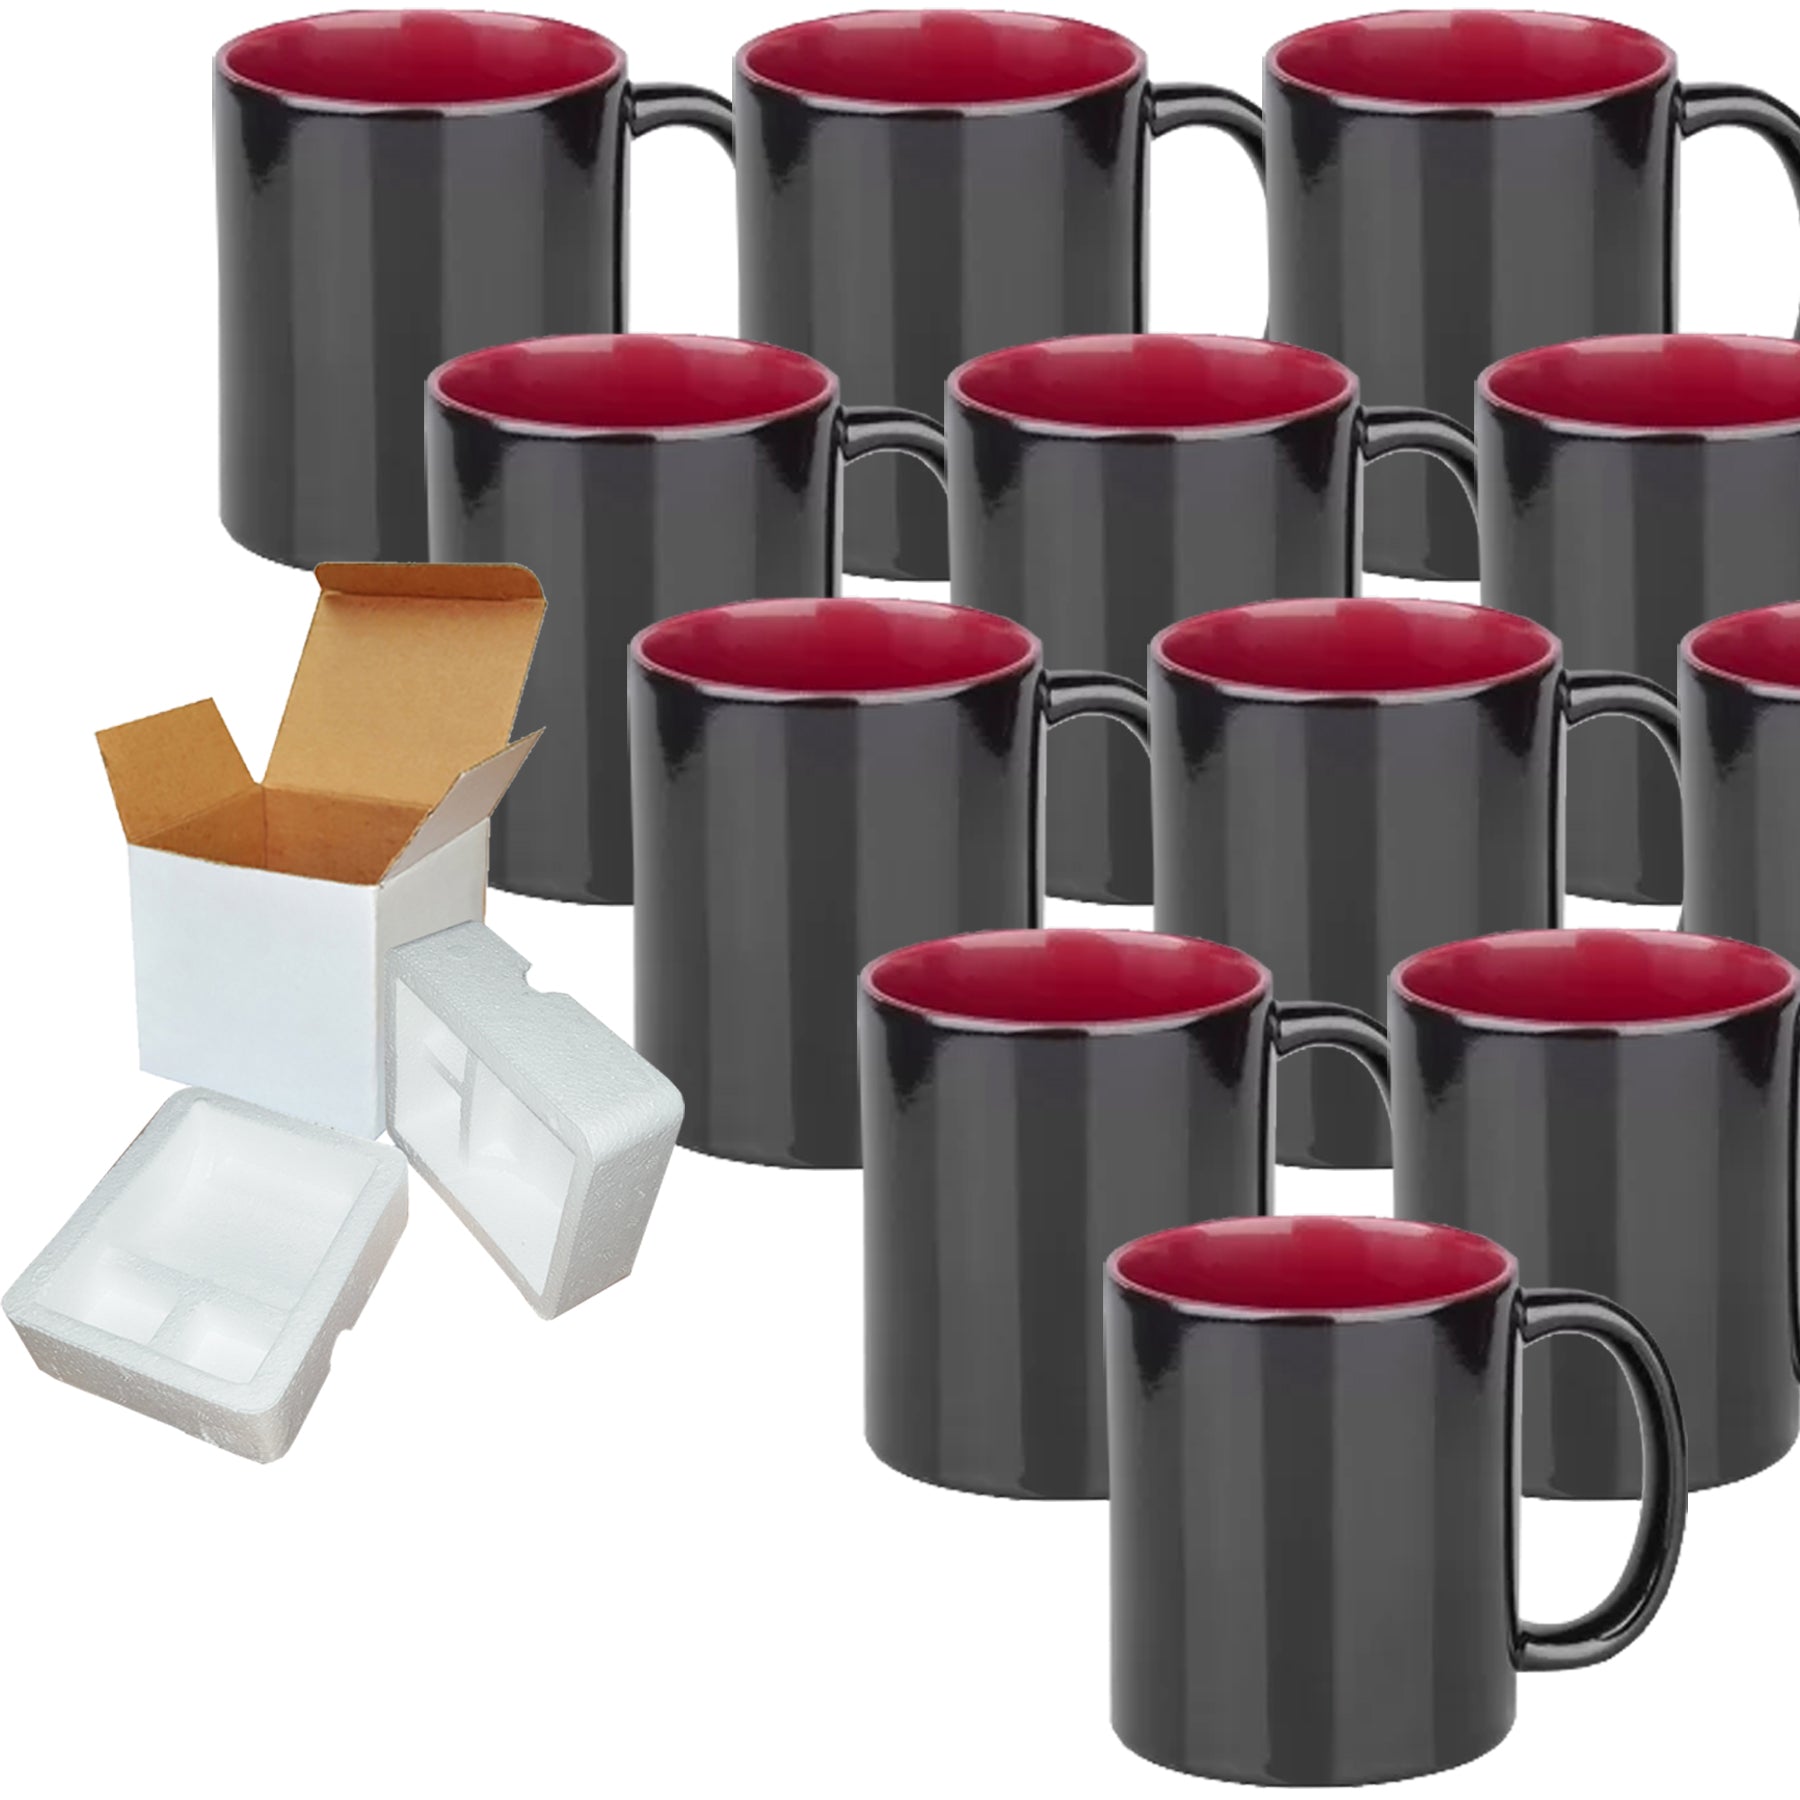 12 Pack 15oz Color Changing Sublimation Mugs With Gift Mug Box